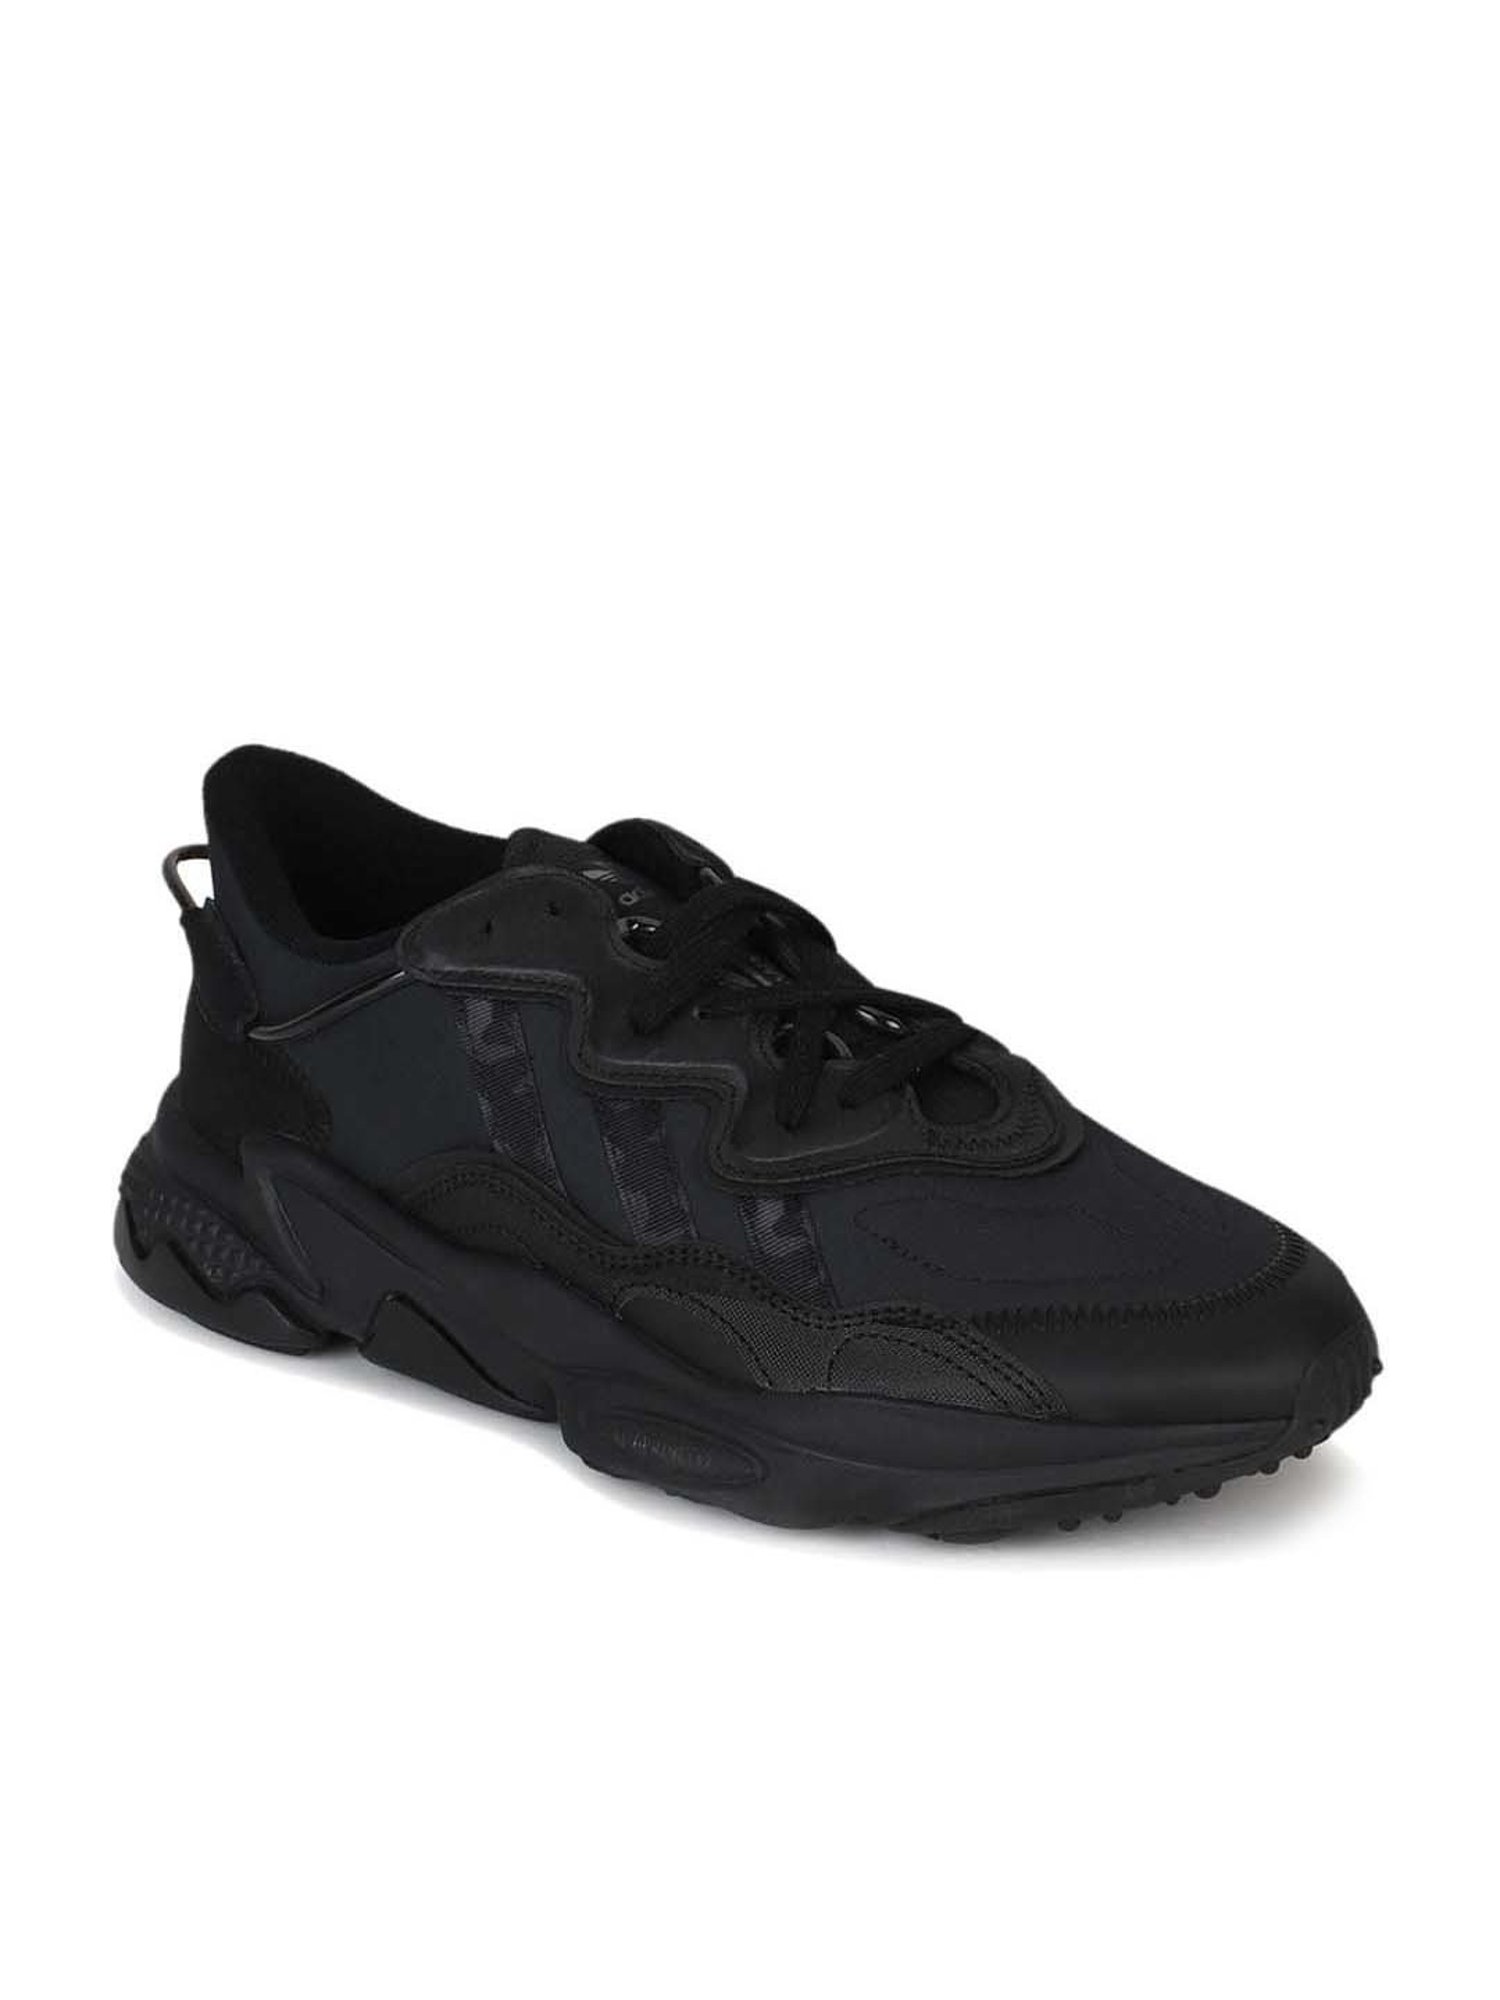 adidas Swift Run 1.0 Shoes - Black | Men's Lifestyle | adidas US